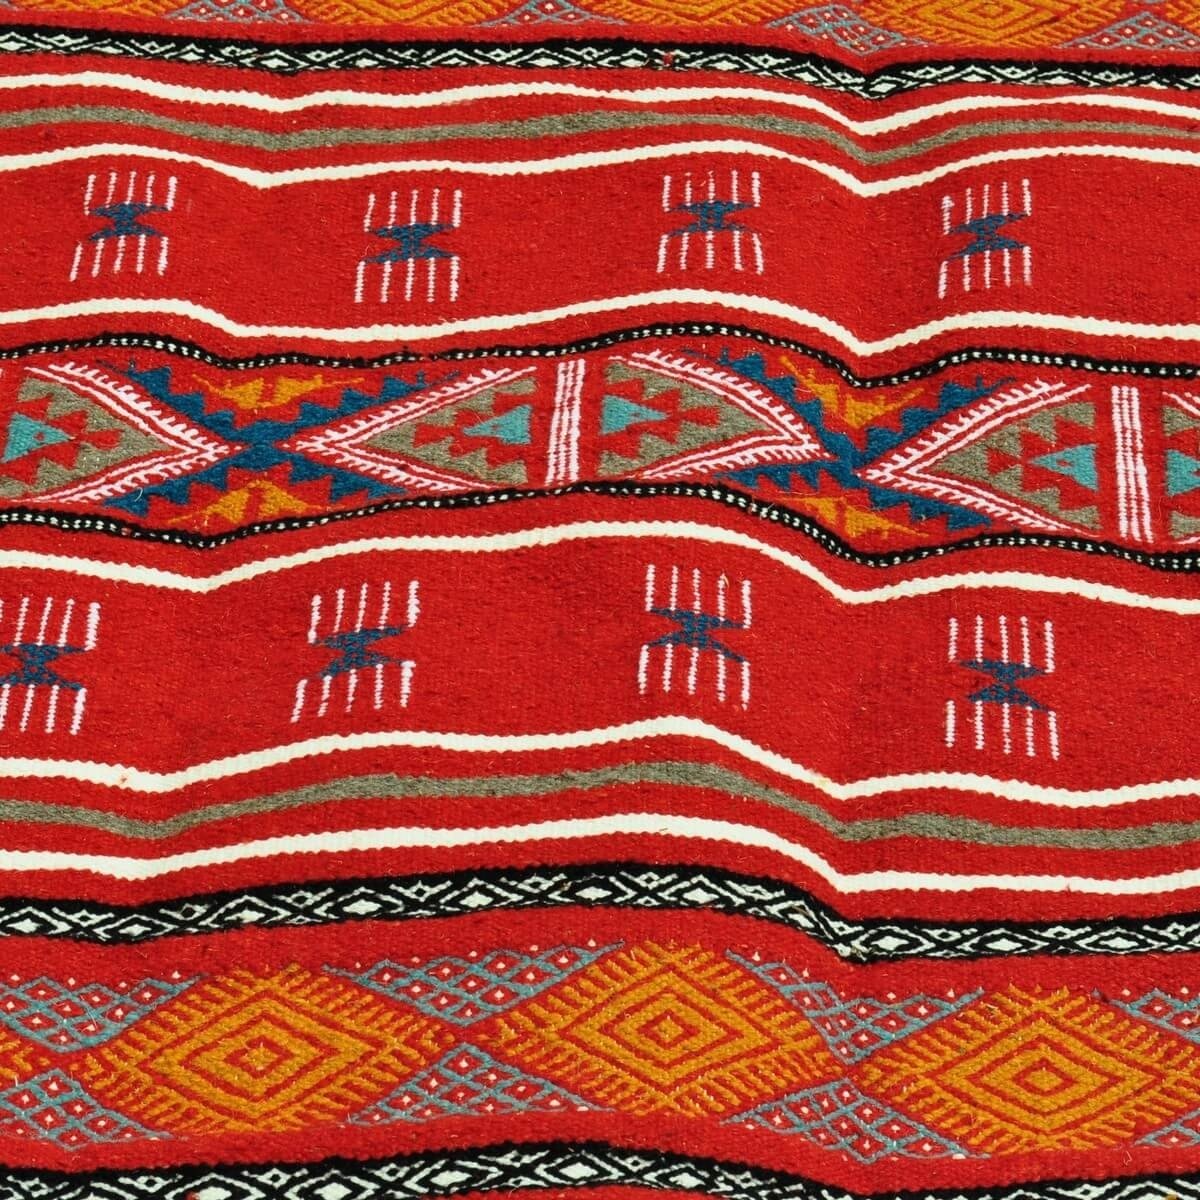 Berber tapijt Groot Tapijt Kilim Bir Salah 180x305 Rood (Handgeweven, Wol, Tunesië) Tunesisch kilimdeken, Marokkaanse stijl. Rec